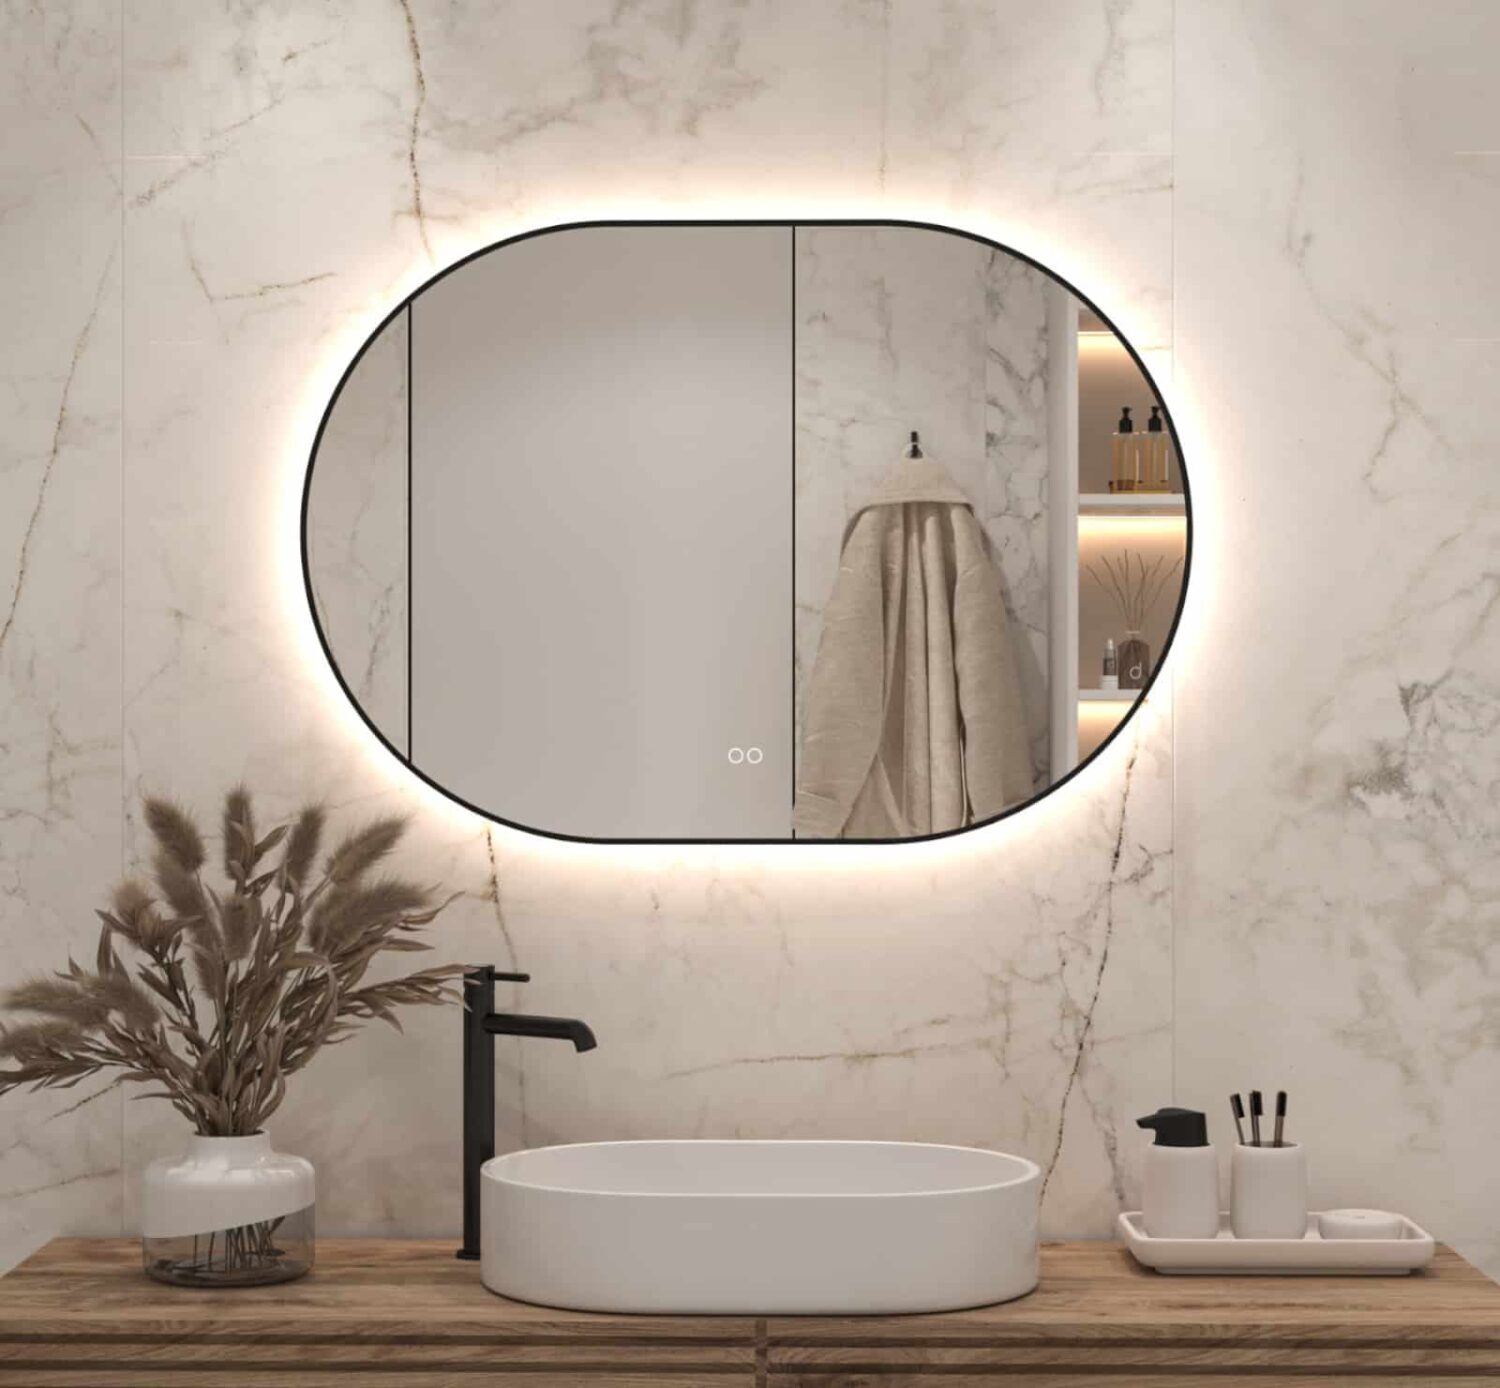 Canberra weekend fabriek Ovale badkamerspiegel met LED verlichting, verwarming, touch sensor,  kleurenwissel en mat zwart frame 100x70 cm - Designspiegels